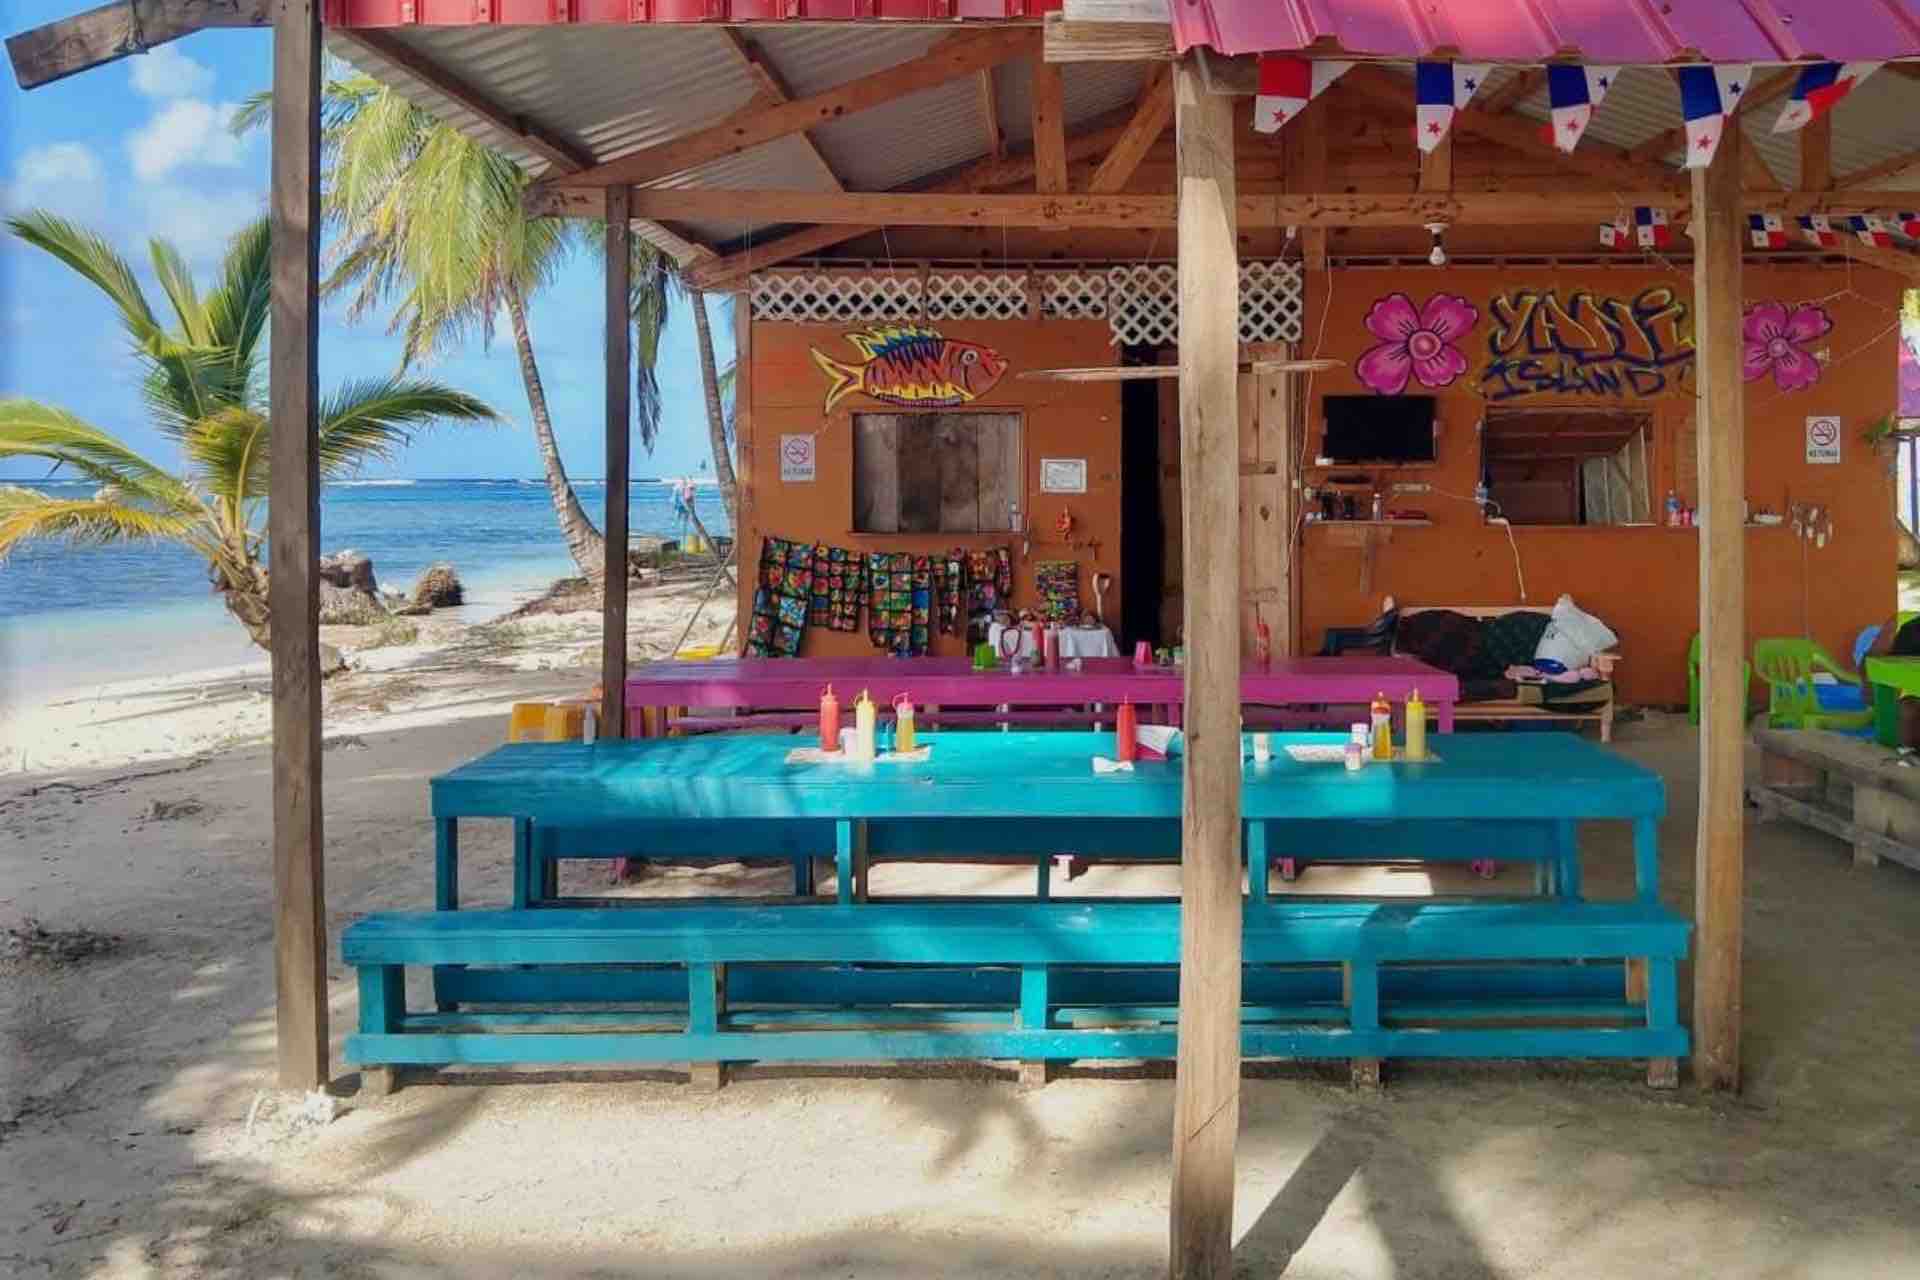 San Blas Isla Yansailadup island restaurant oceanview beach